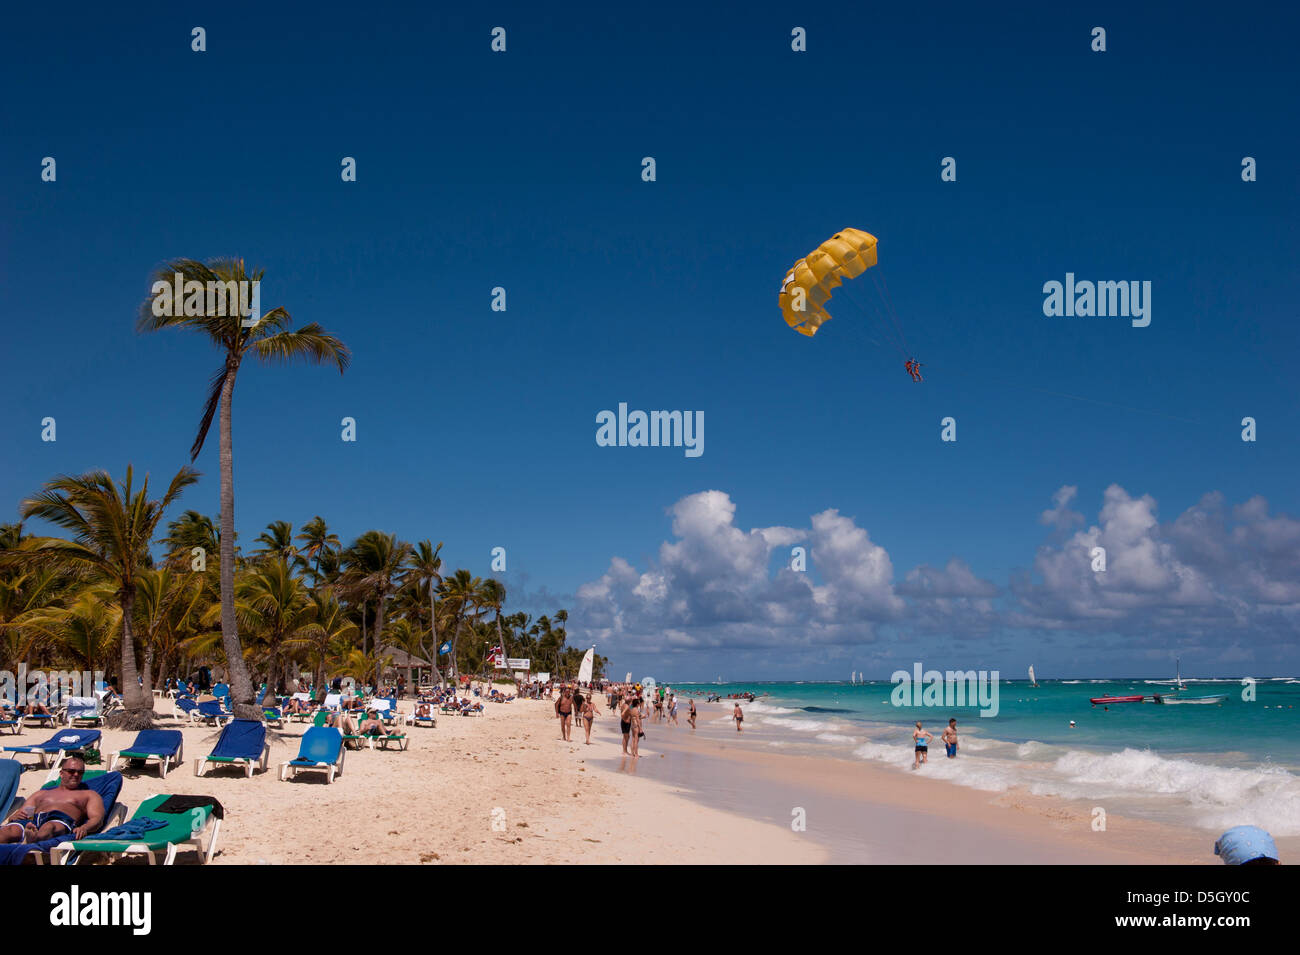 Dominican Republic, Punta Cana, Higuey, Bavaro, Bavaro Beach, parasailing Stock Photo